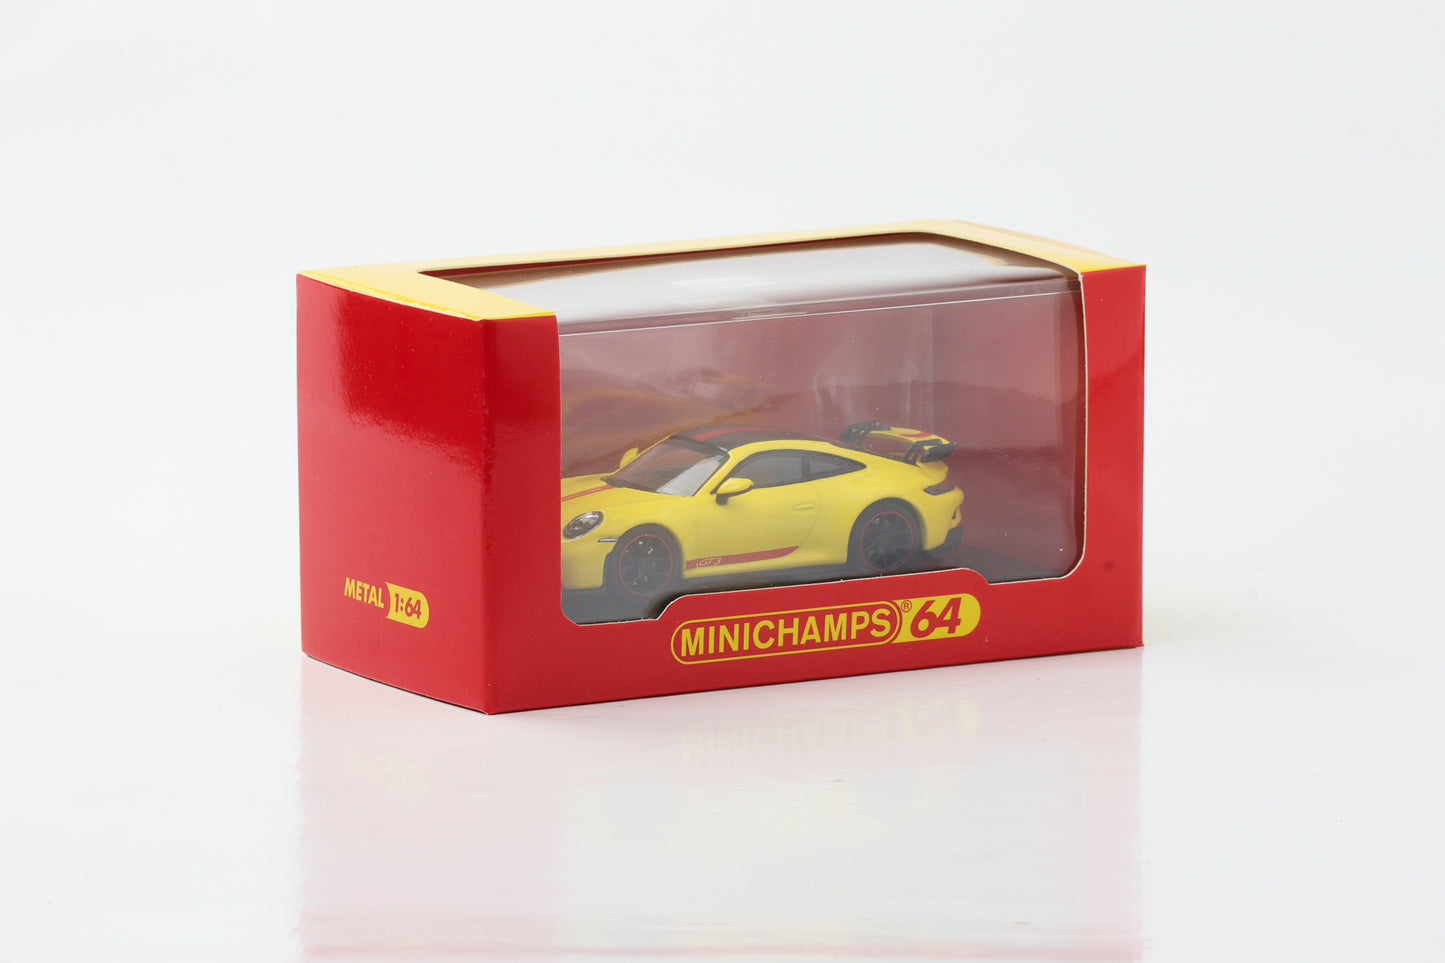 1:64 Porsche 911 992 GT3 2021 racing yellow Minichamps 64 diecast